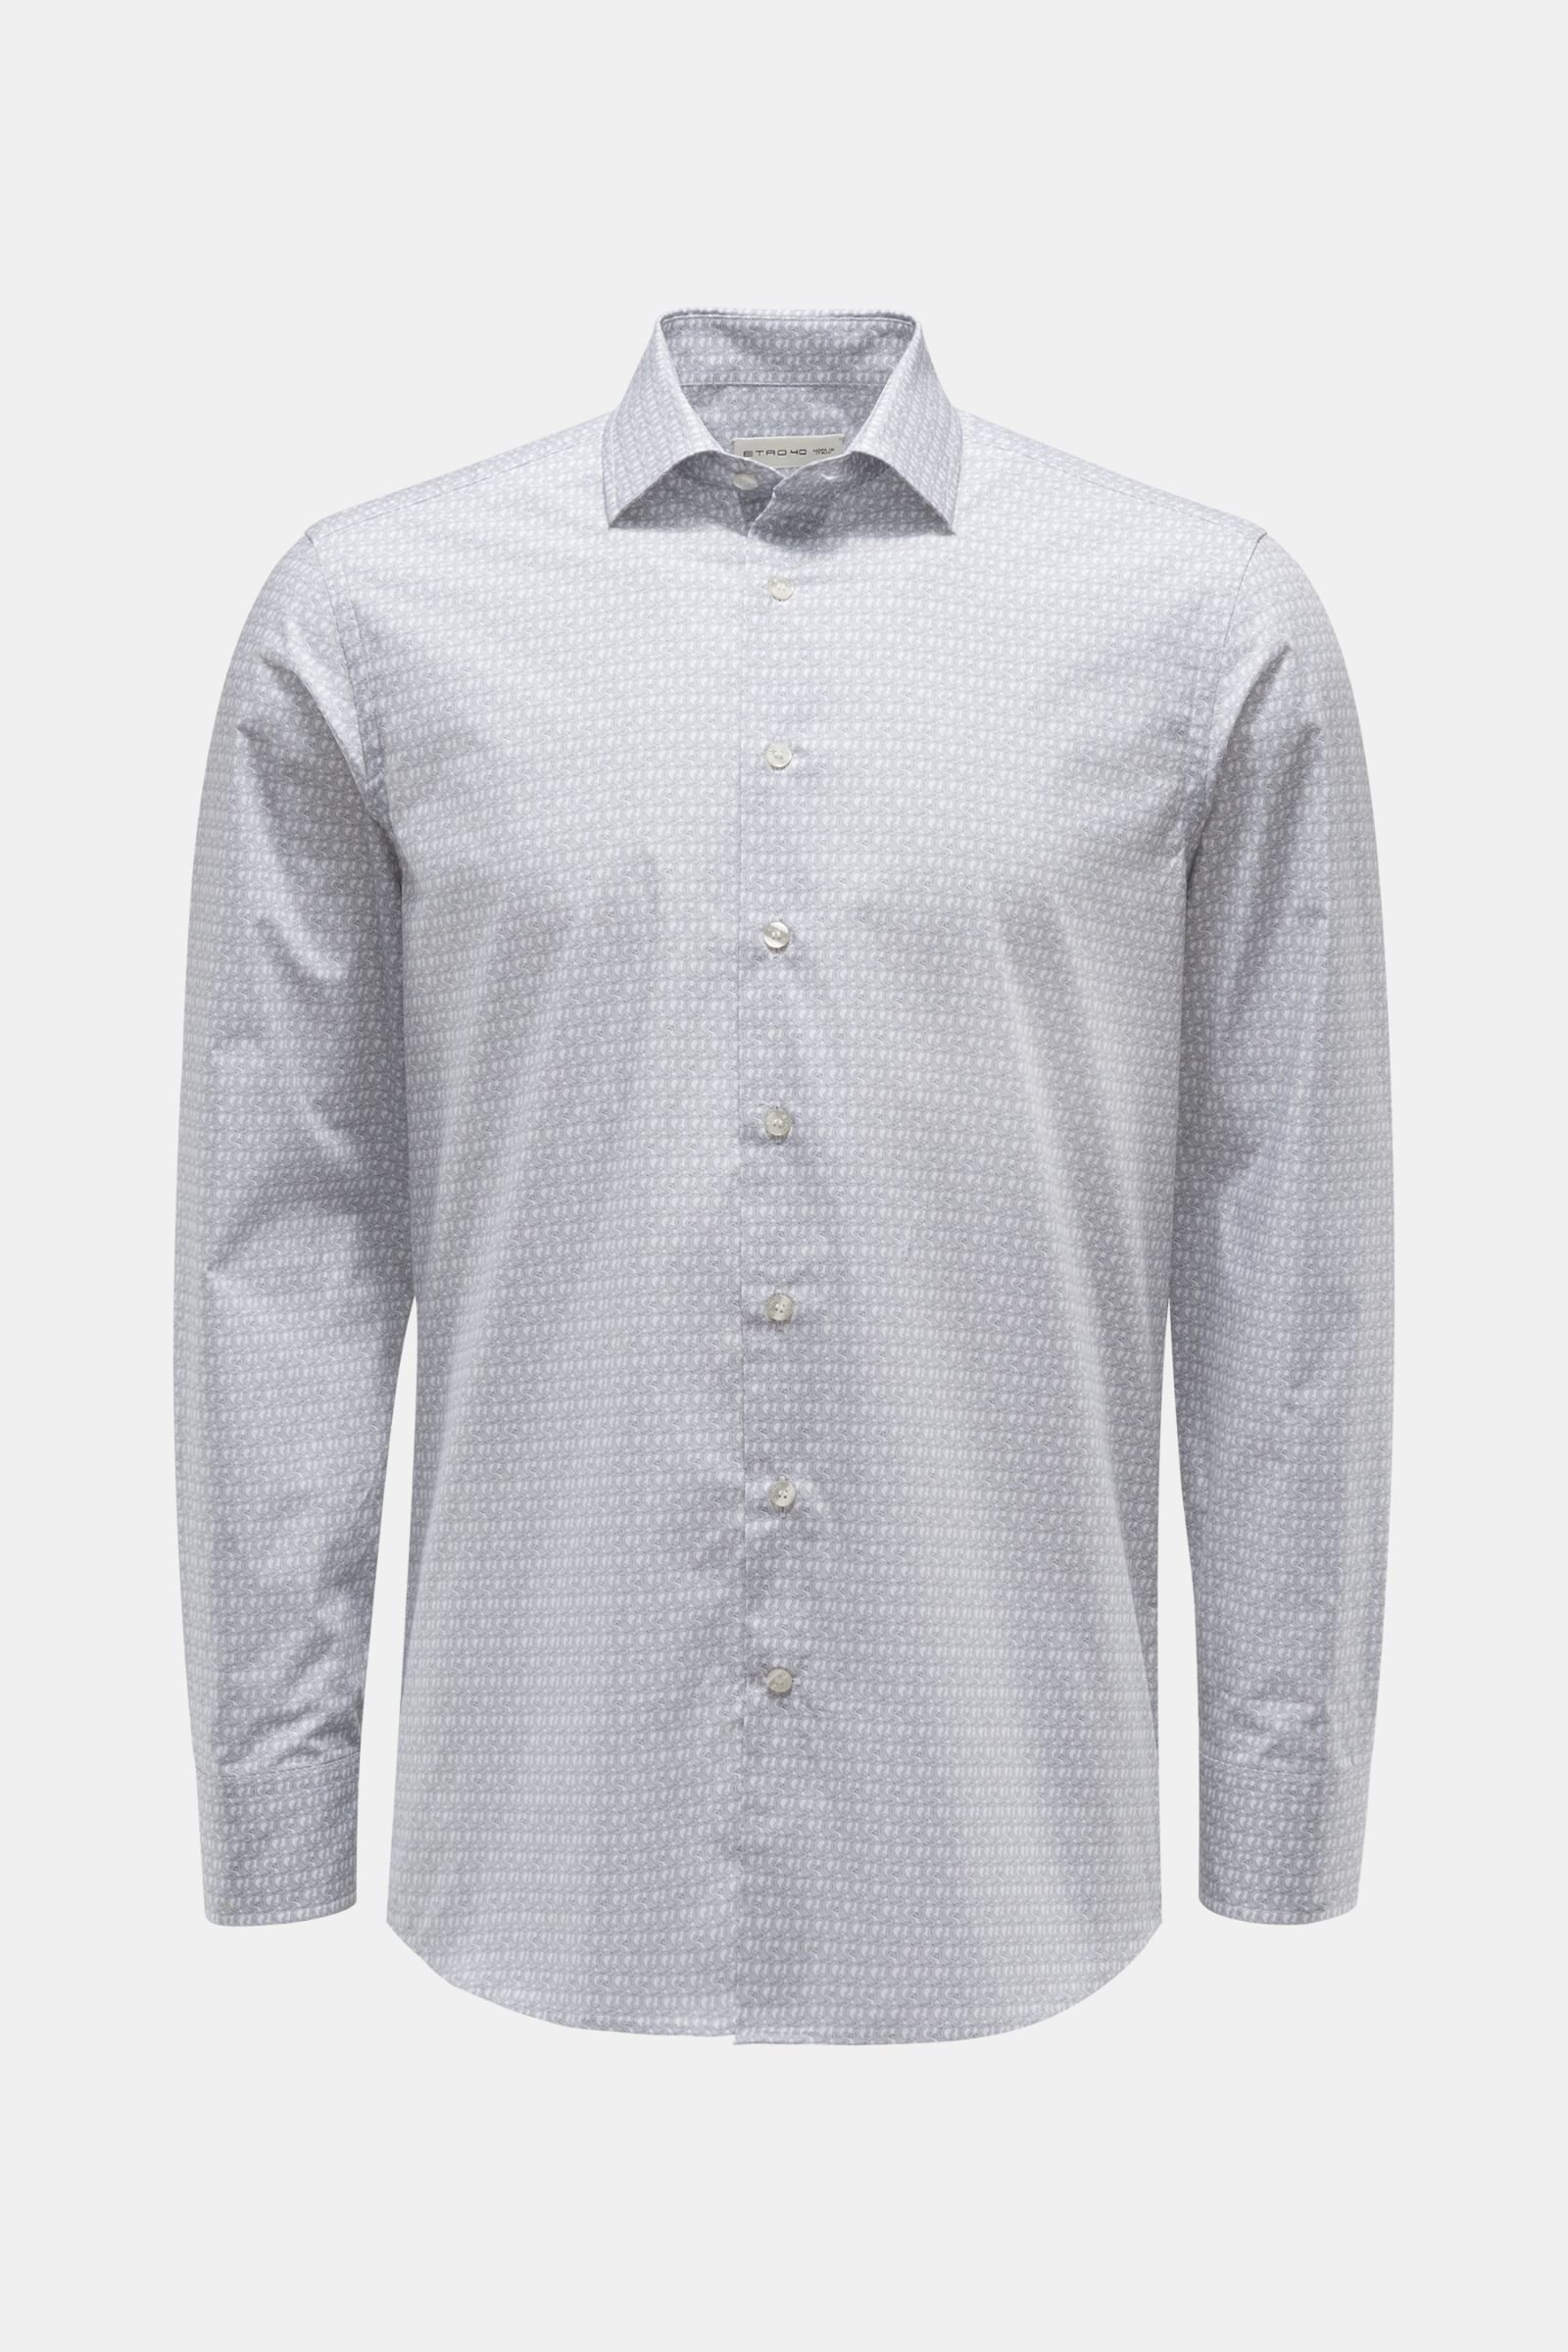 Casual shirt shark collar light grey/white patterned